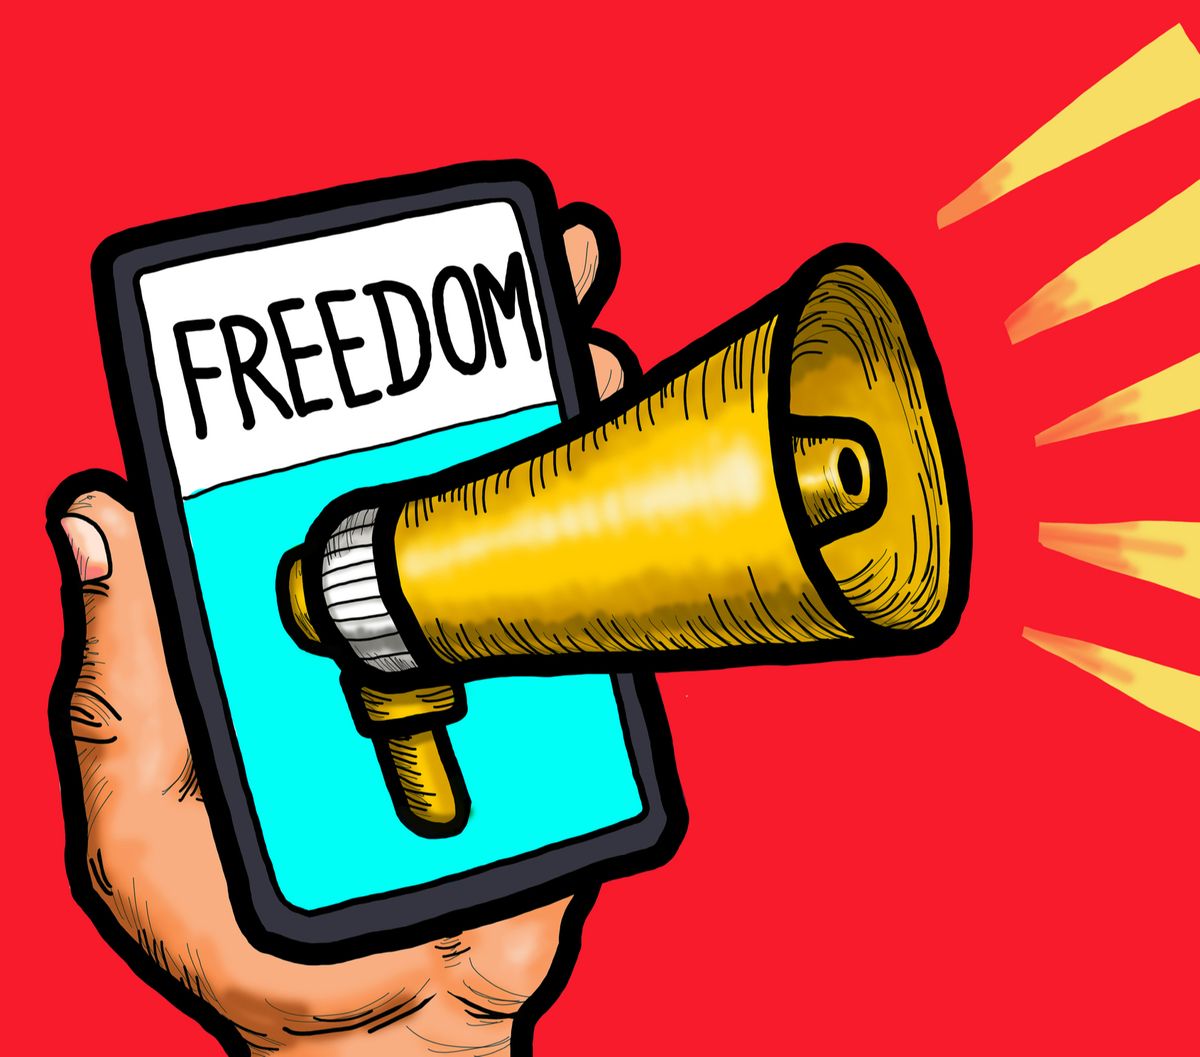 media freedom